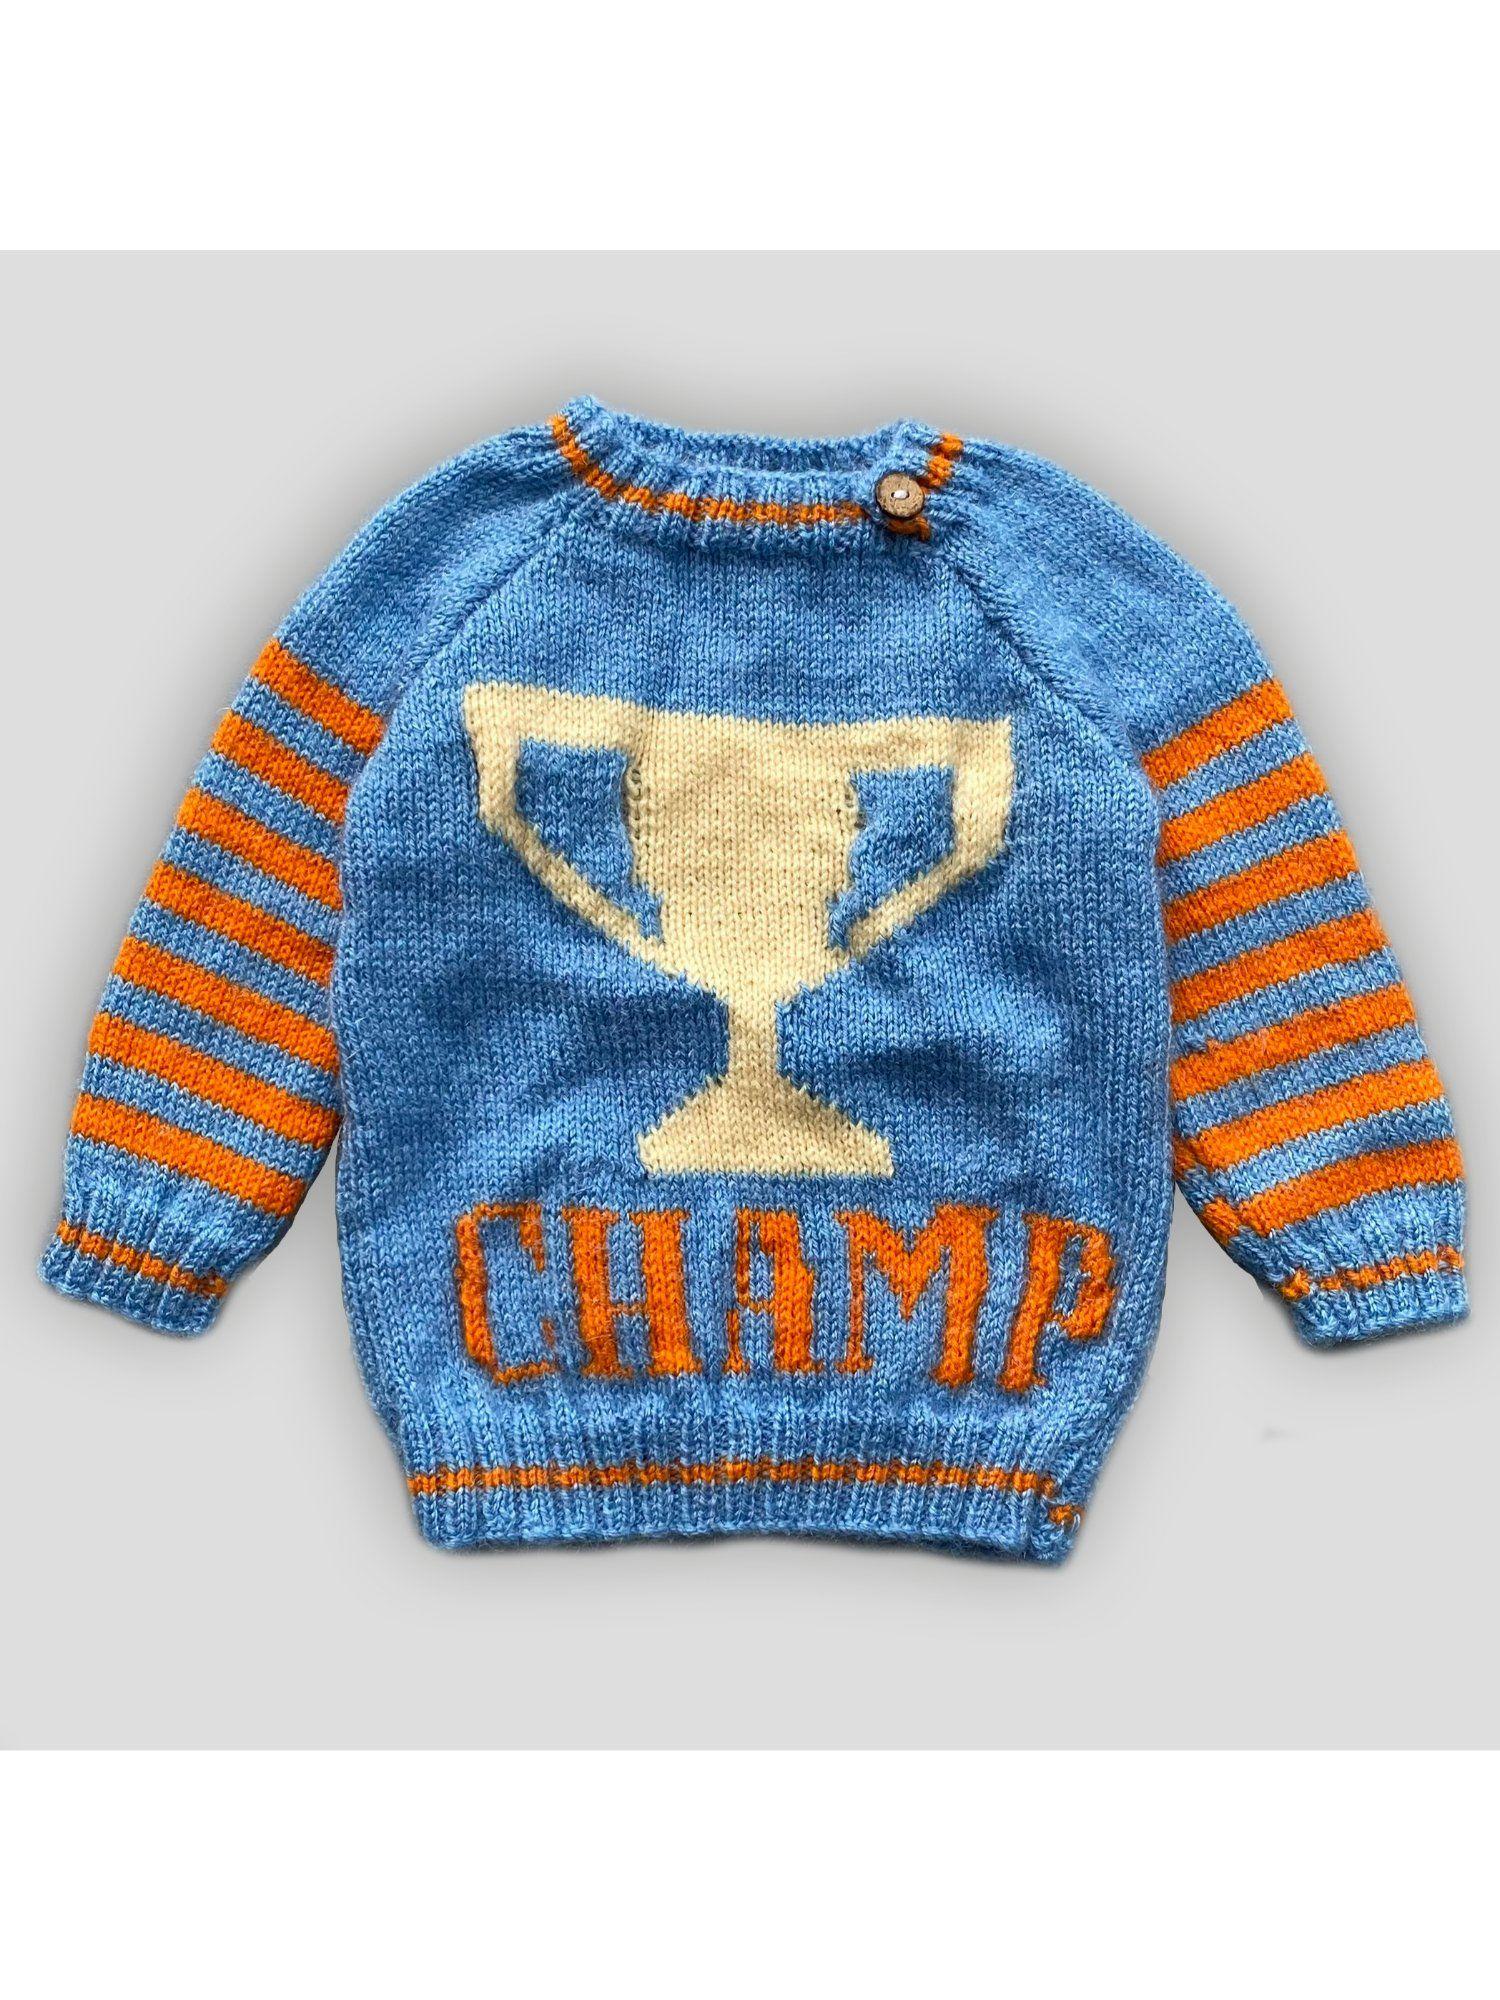 handmade champ trophy full sleeves sweater - blue